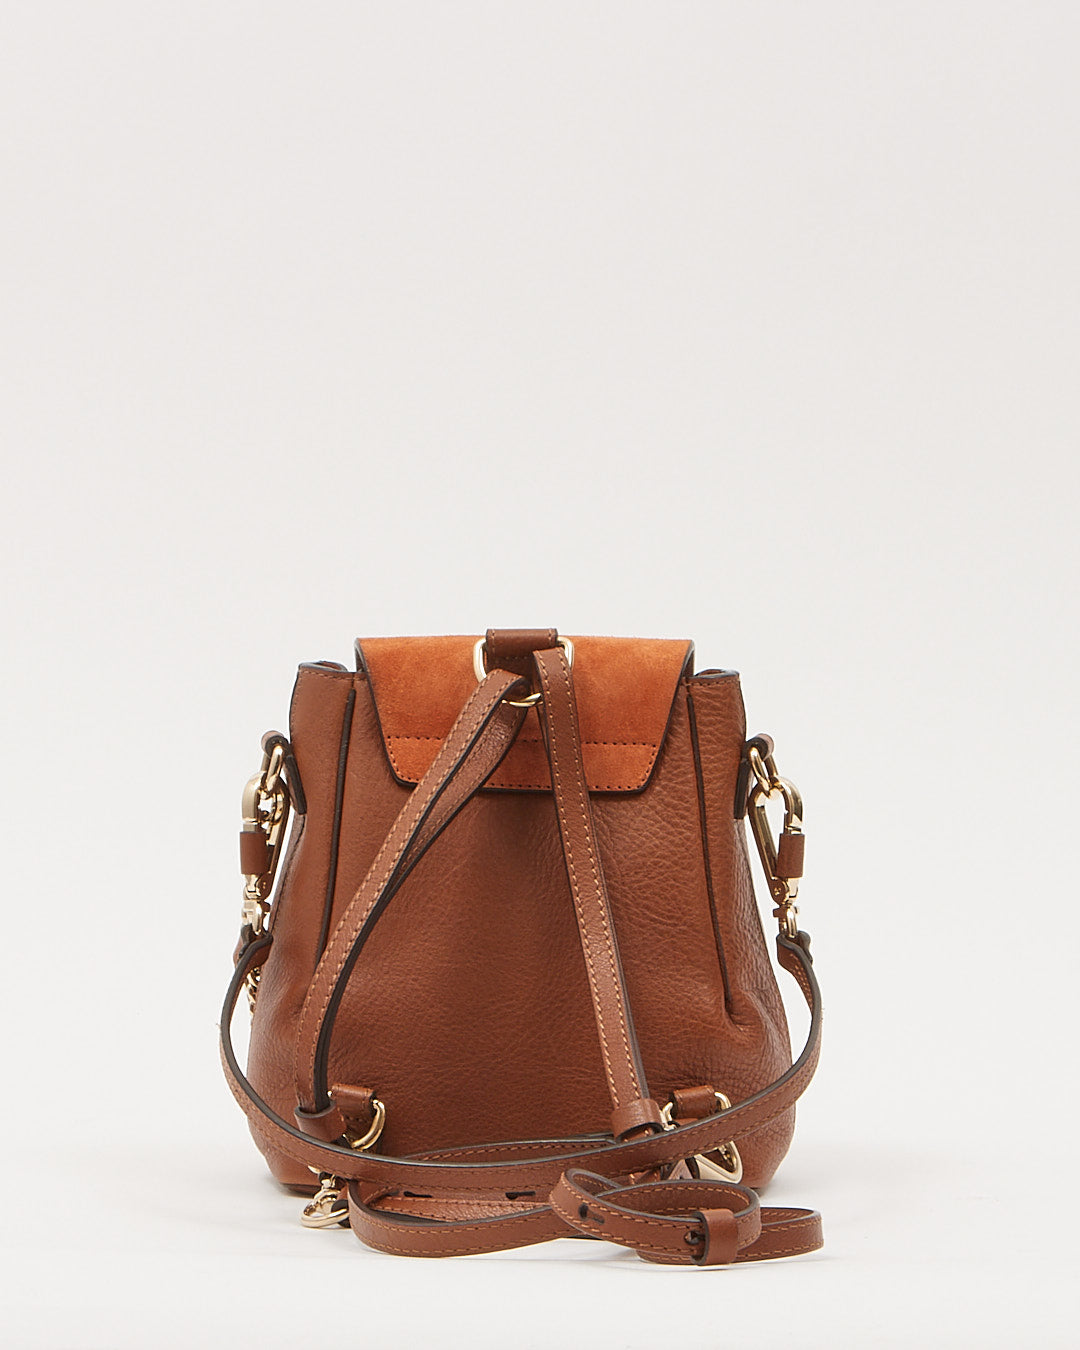 Chloe Chestnut Leather & Suede Mini Faye Backpack